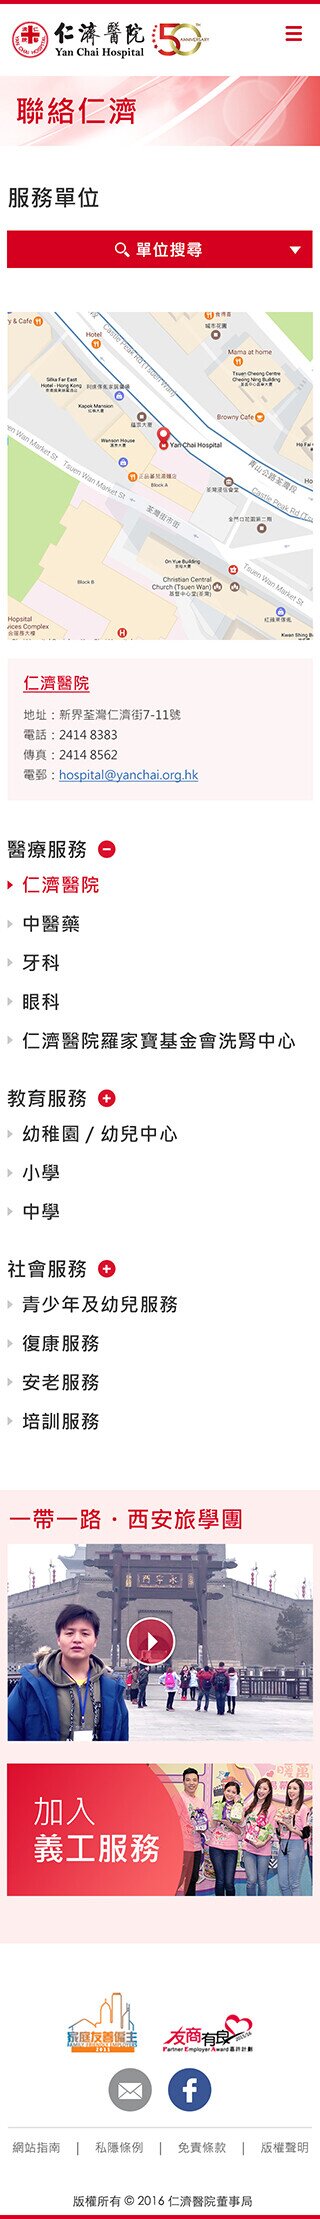 Yan Chai Hospital website screenshot for mobile version 5 of 5